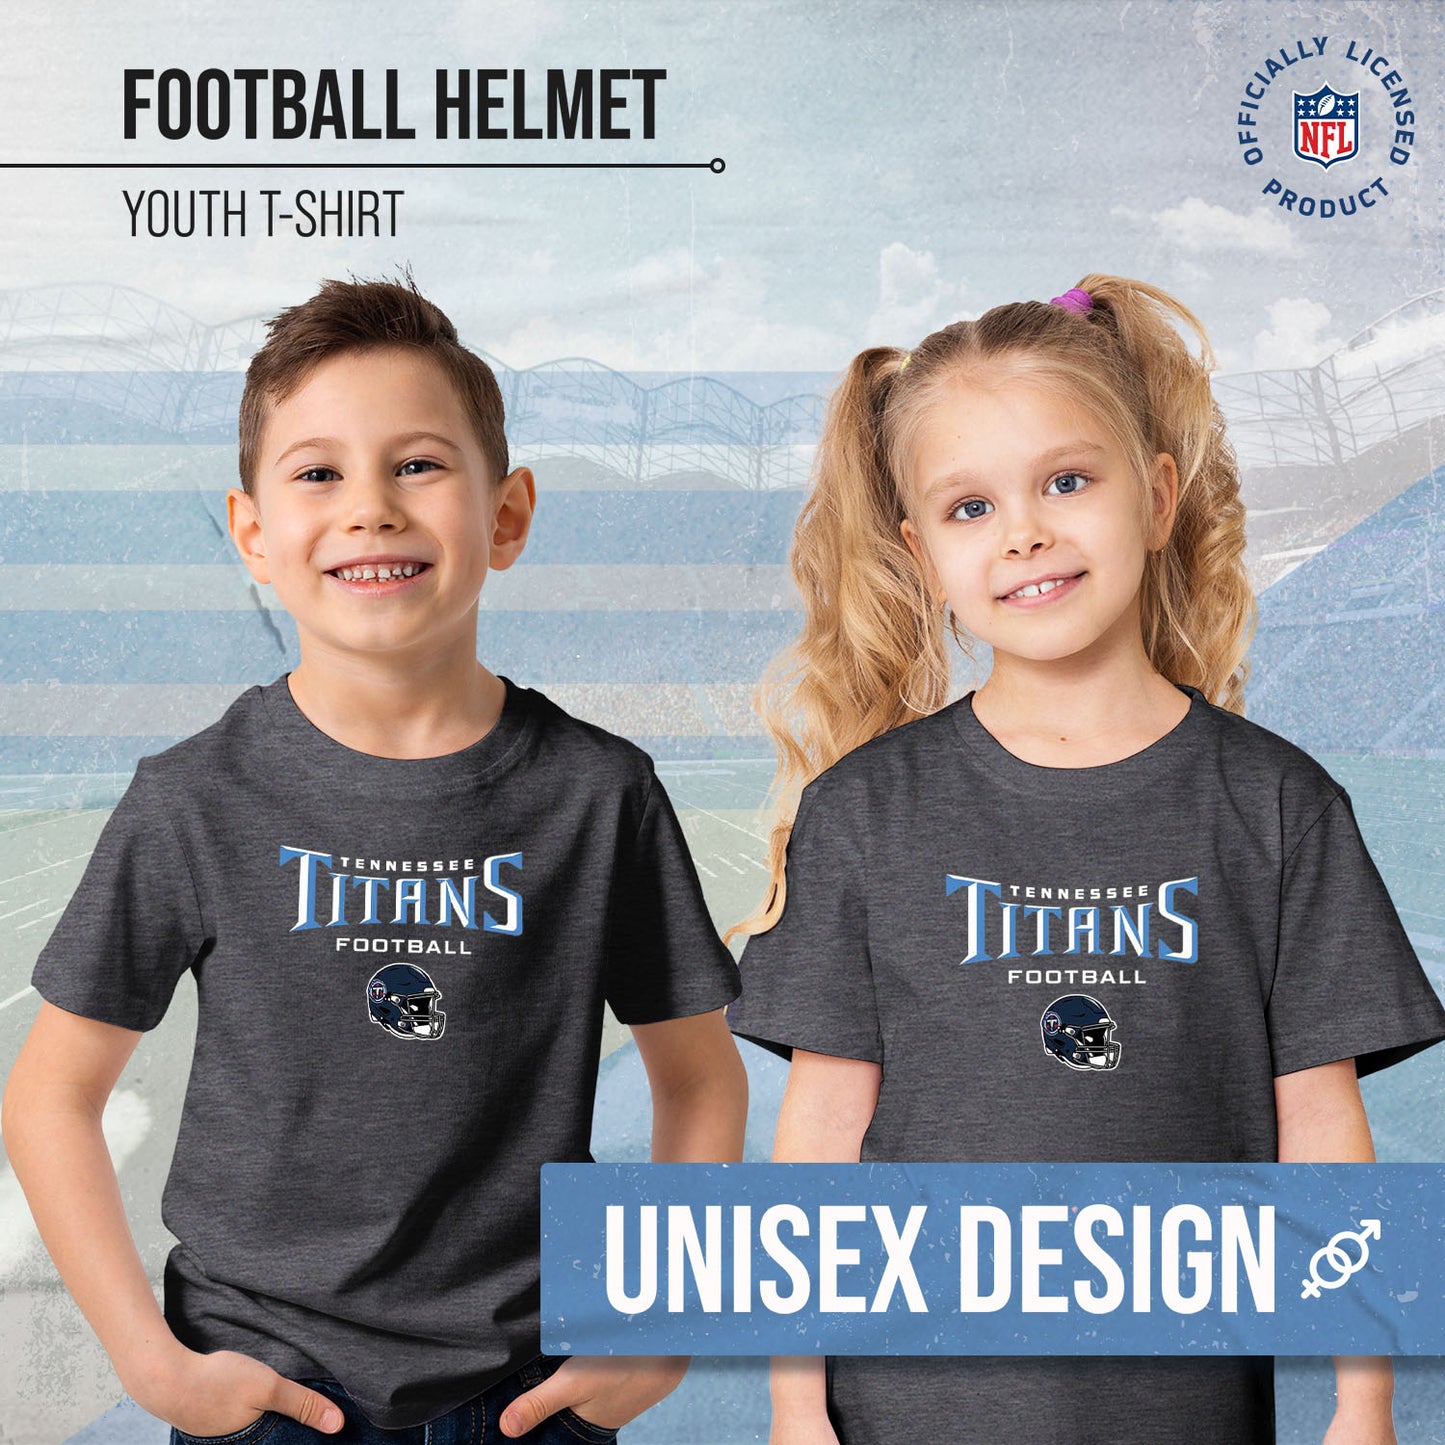 Tennessee Titans NFL Youth Football Helmet Tagless T-Shirt - Charcoal